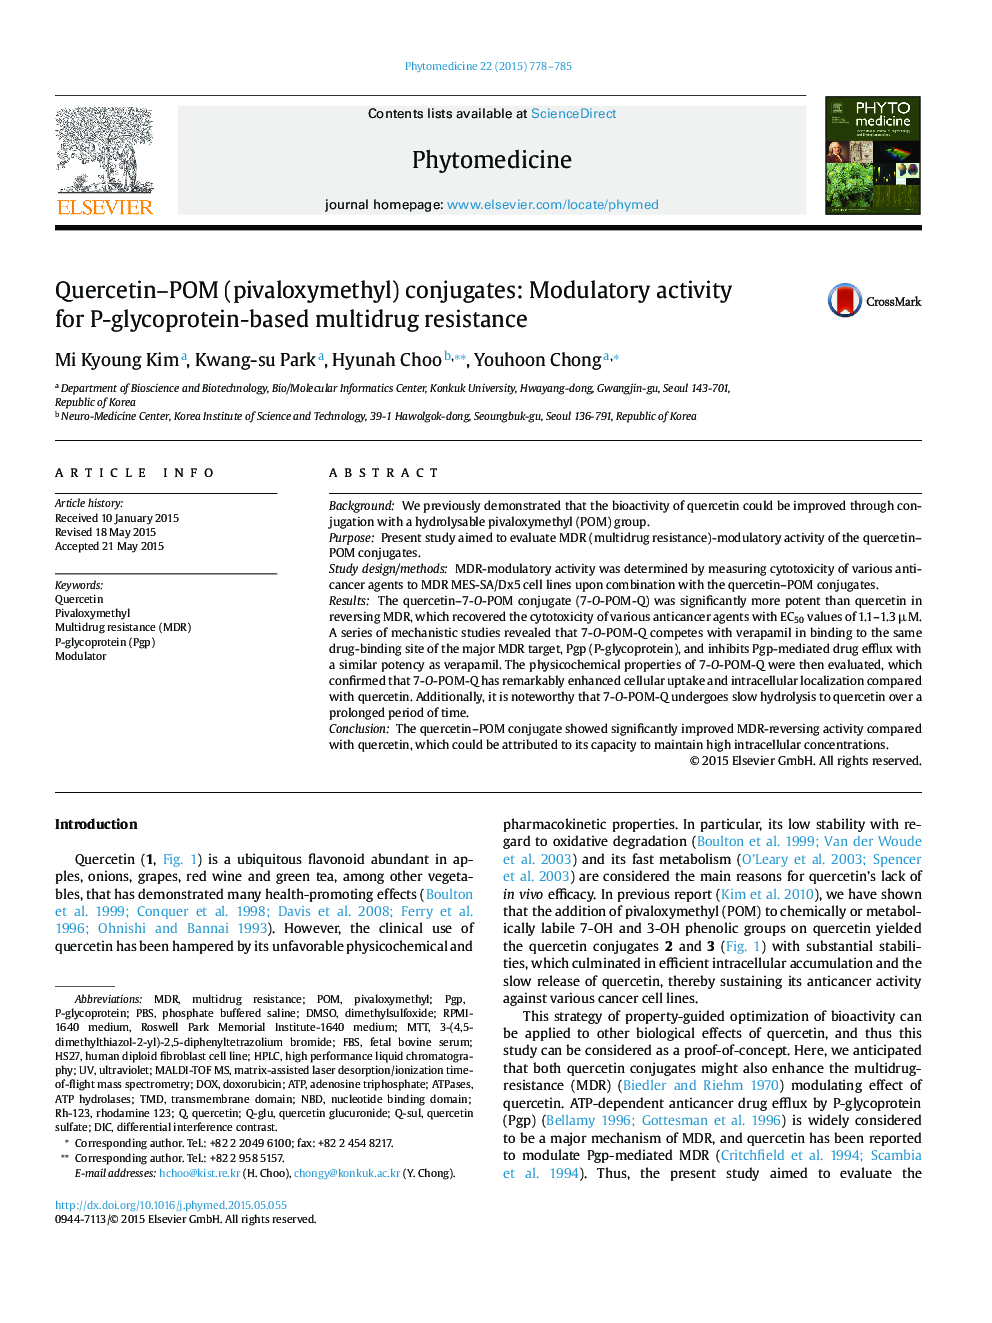 Quercetin–POM (pivaloxymethyl) conjugates: Modulatory activity for P-glycoprotein-based multidrug resistance